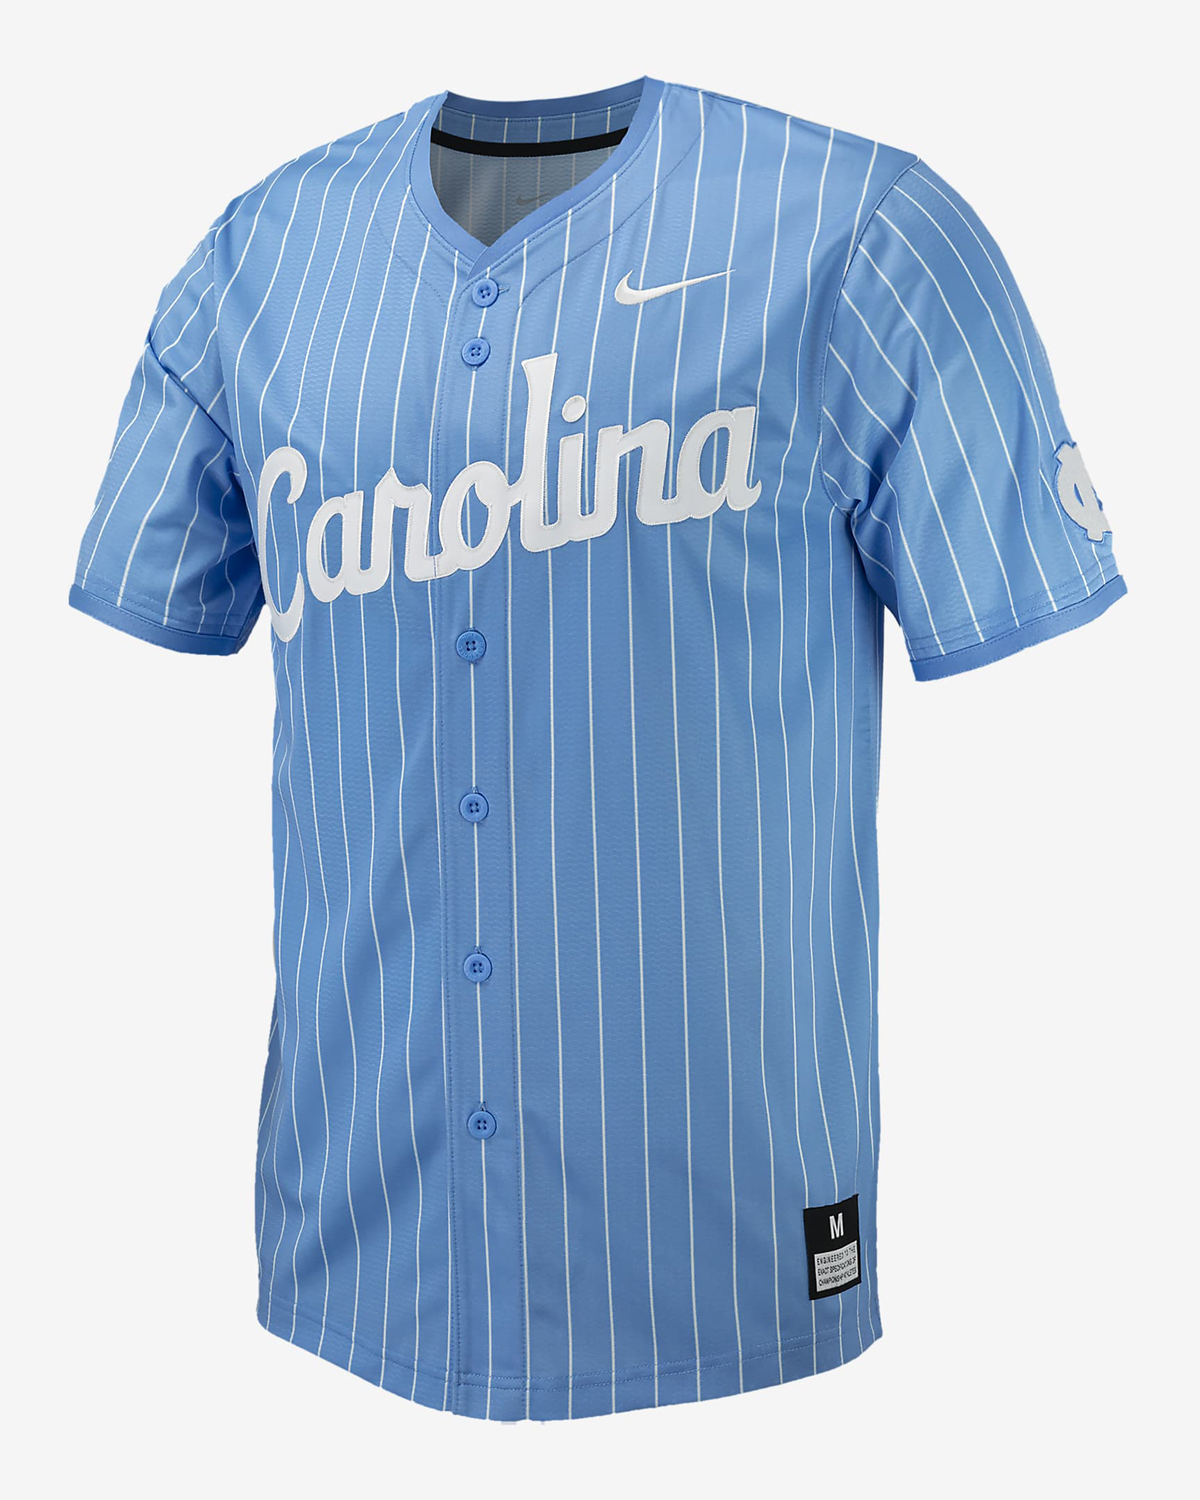 Nike-UNC-Baseball-Jersey-Valor-Blue